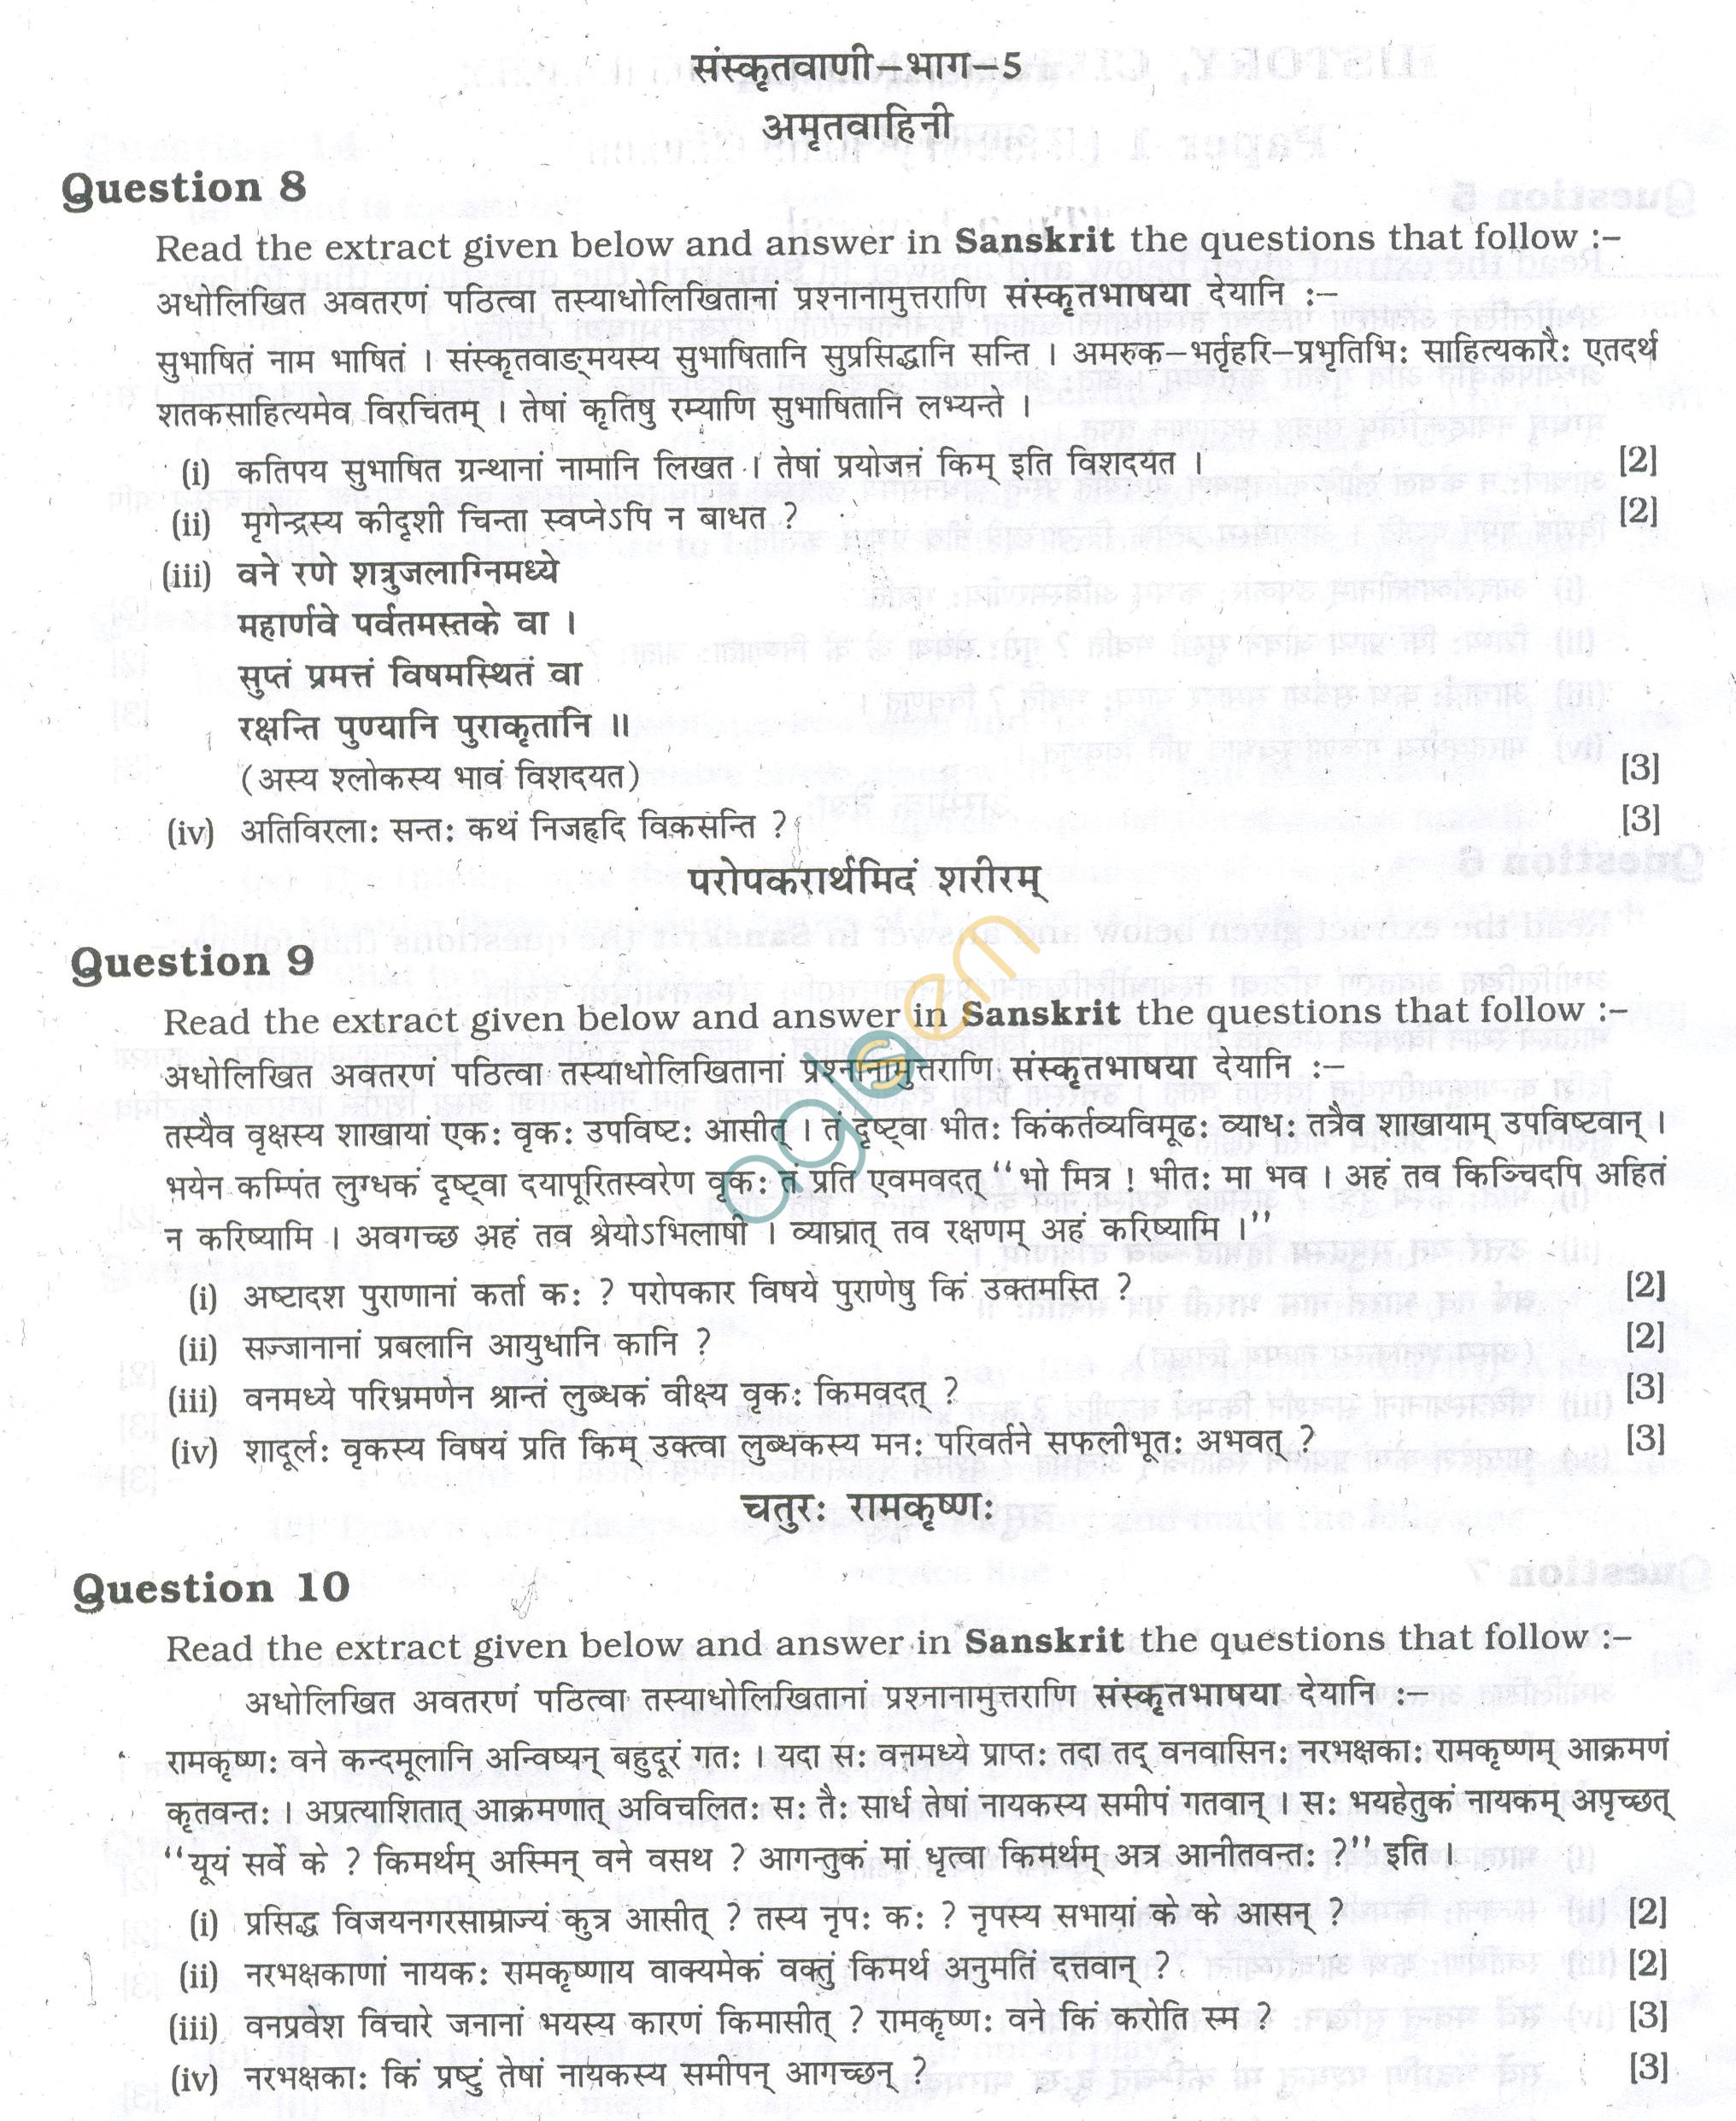 ICSE Question Papers 2013 for Class 10 - Sanskrit/